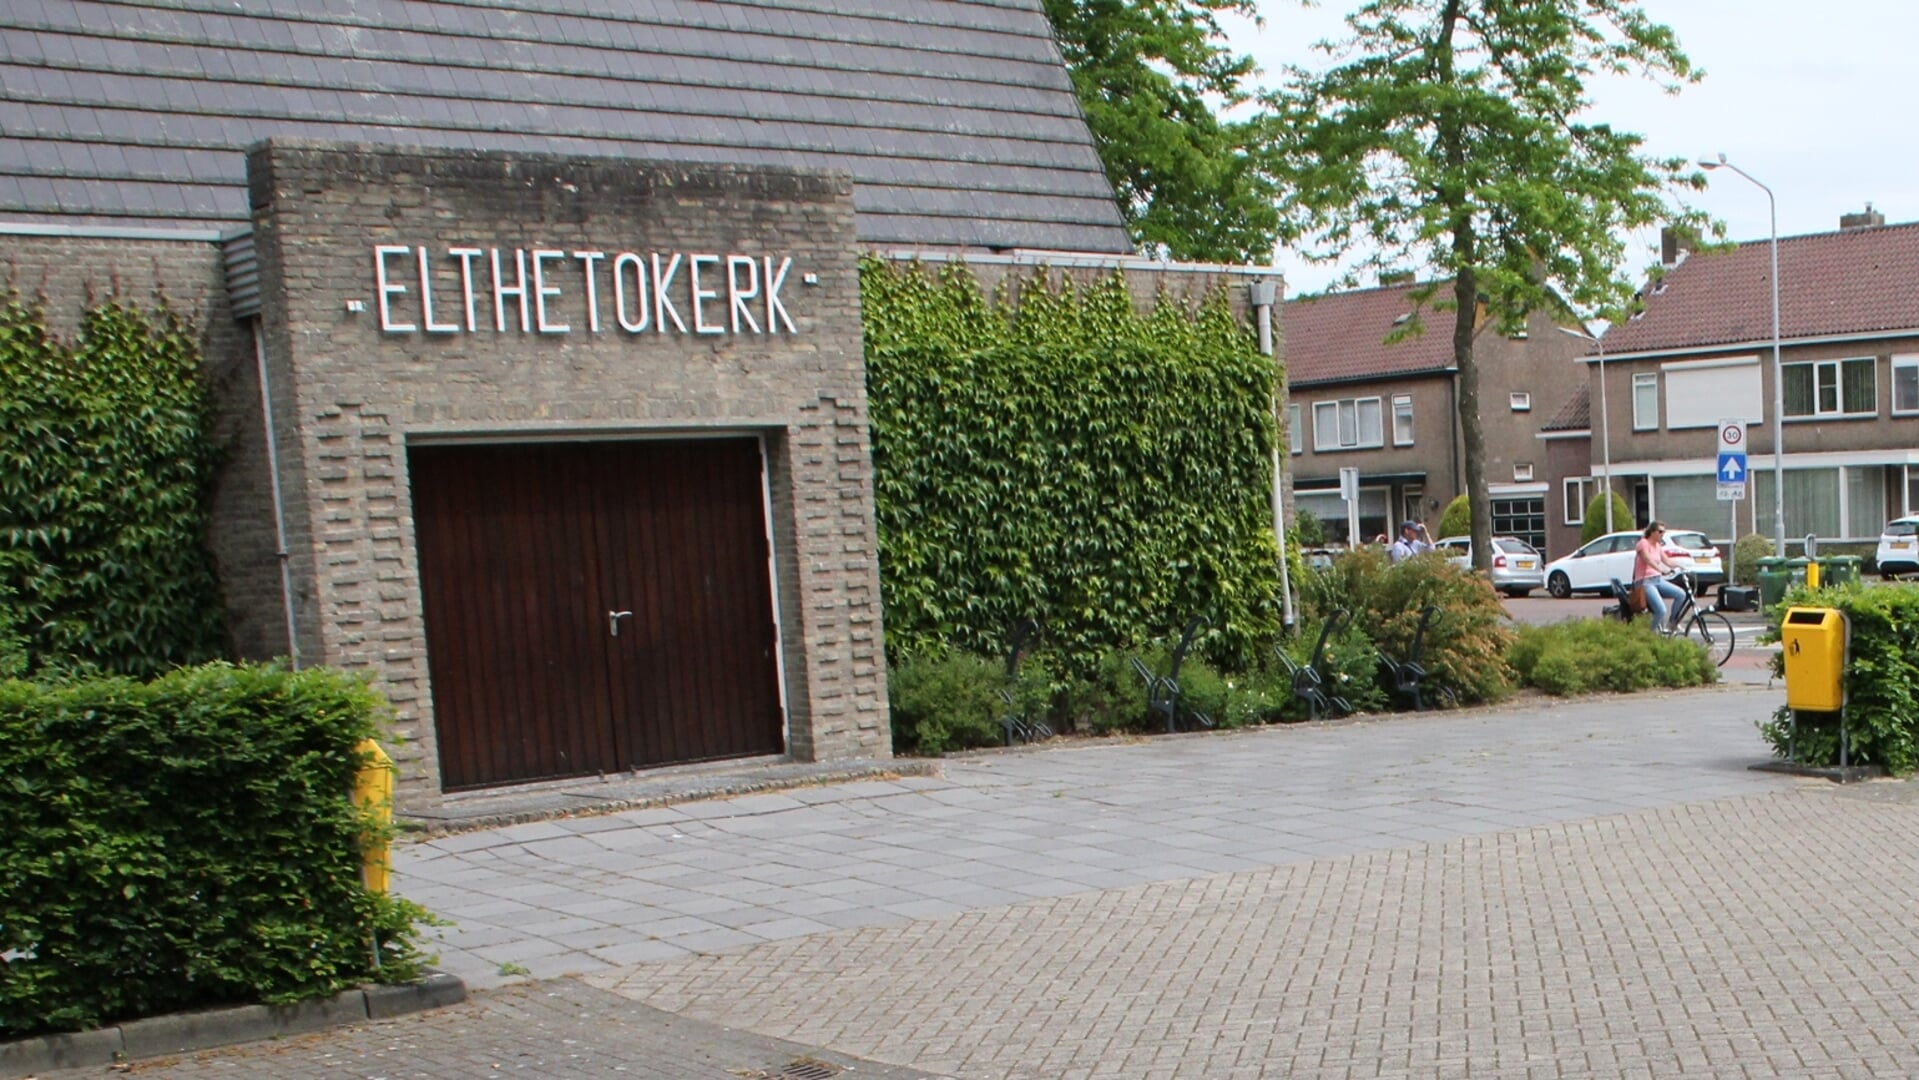 • De Elthetokerk in Alblasserdam.